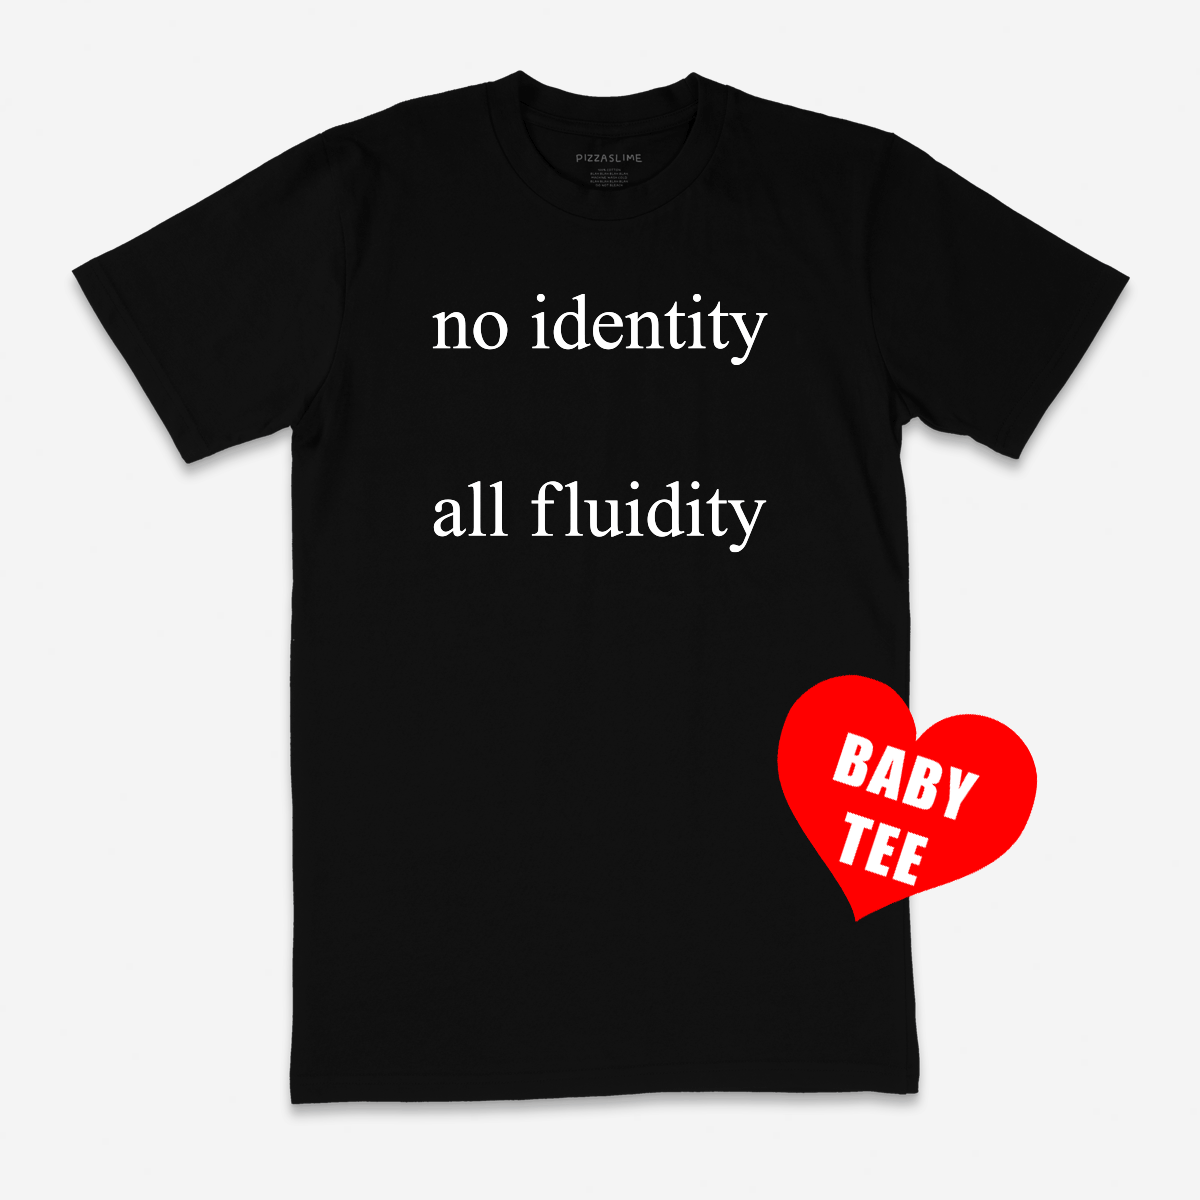 no identity all fluidity (Baby Tee)